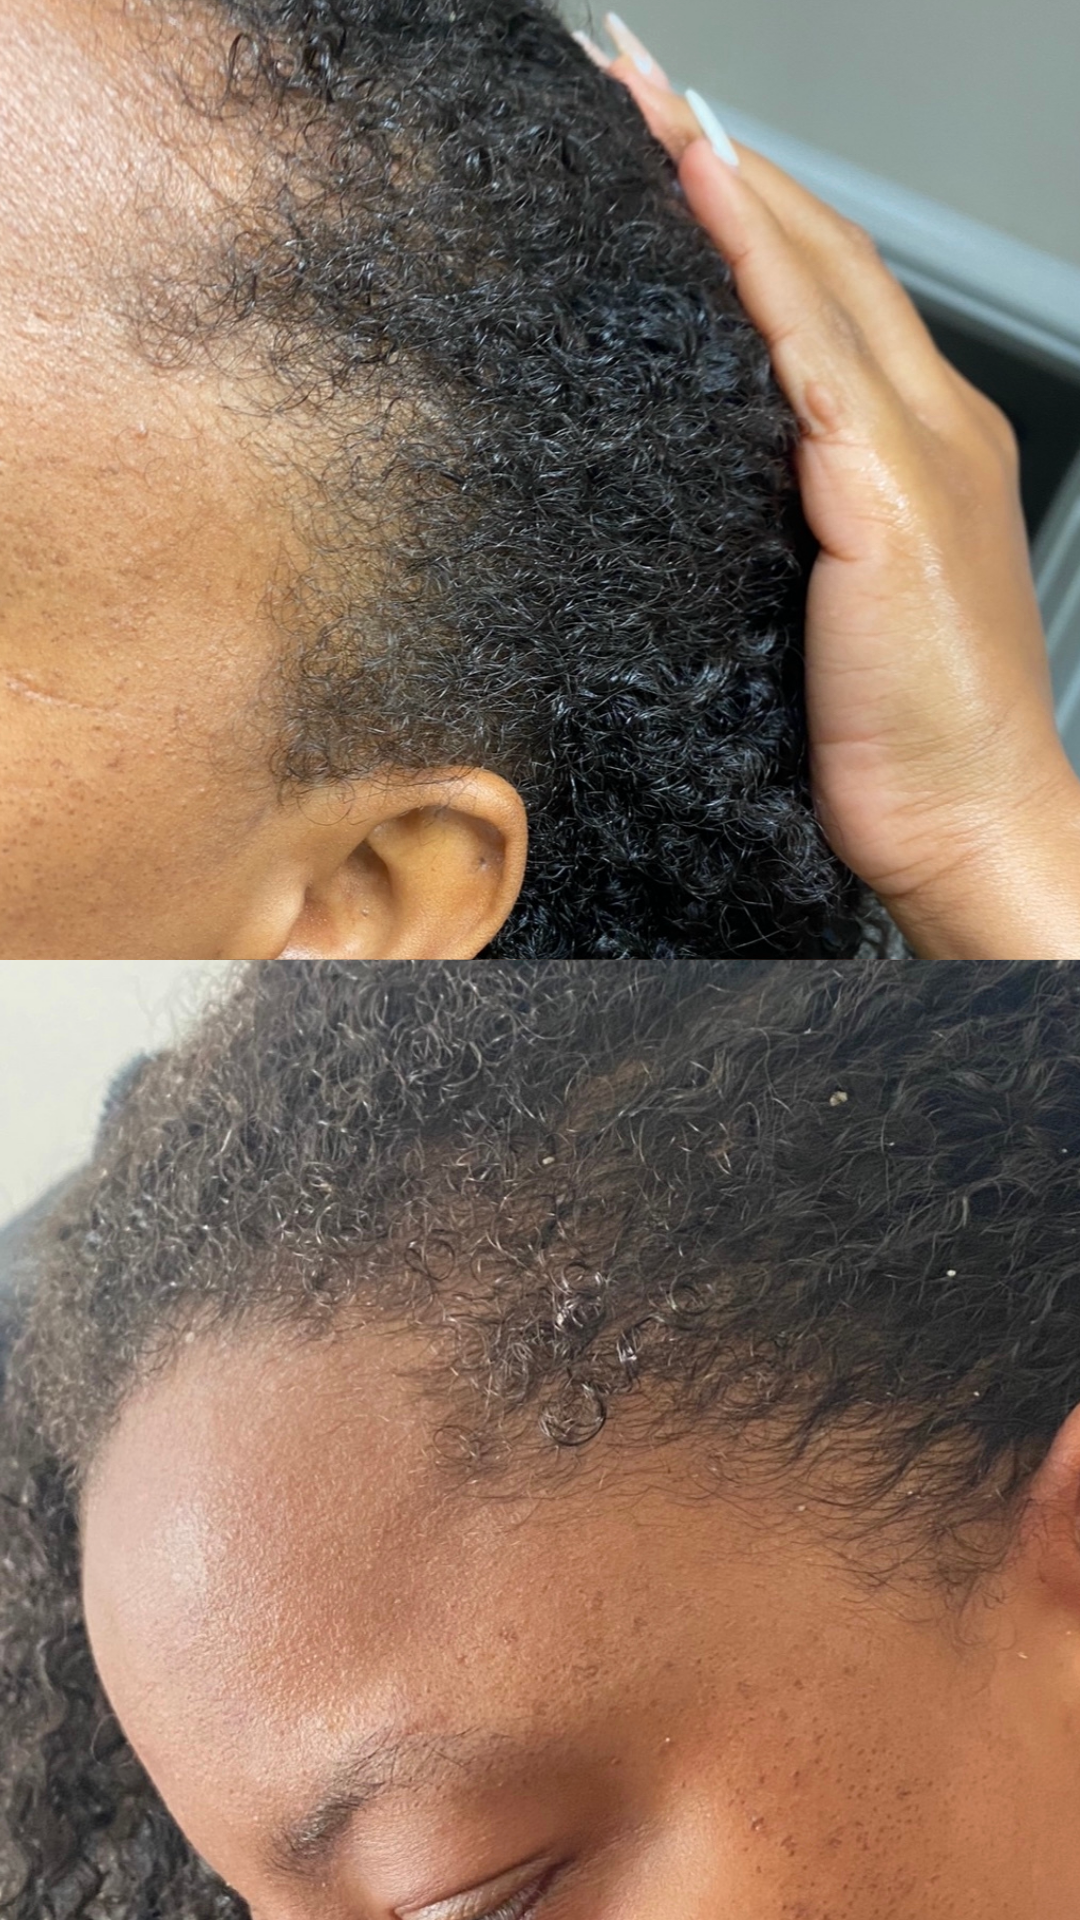 Stimulating Scalp Potion - Hair Growth Oil